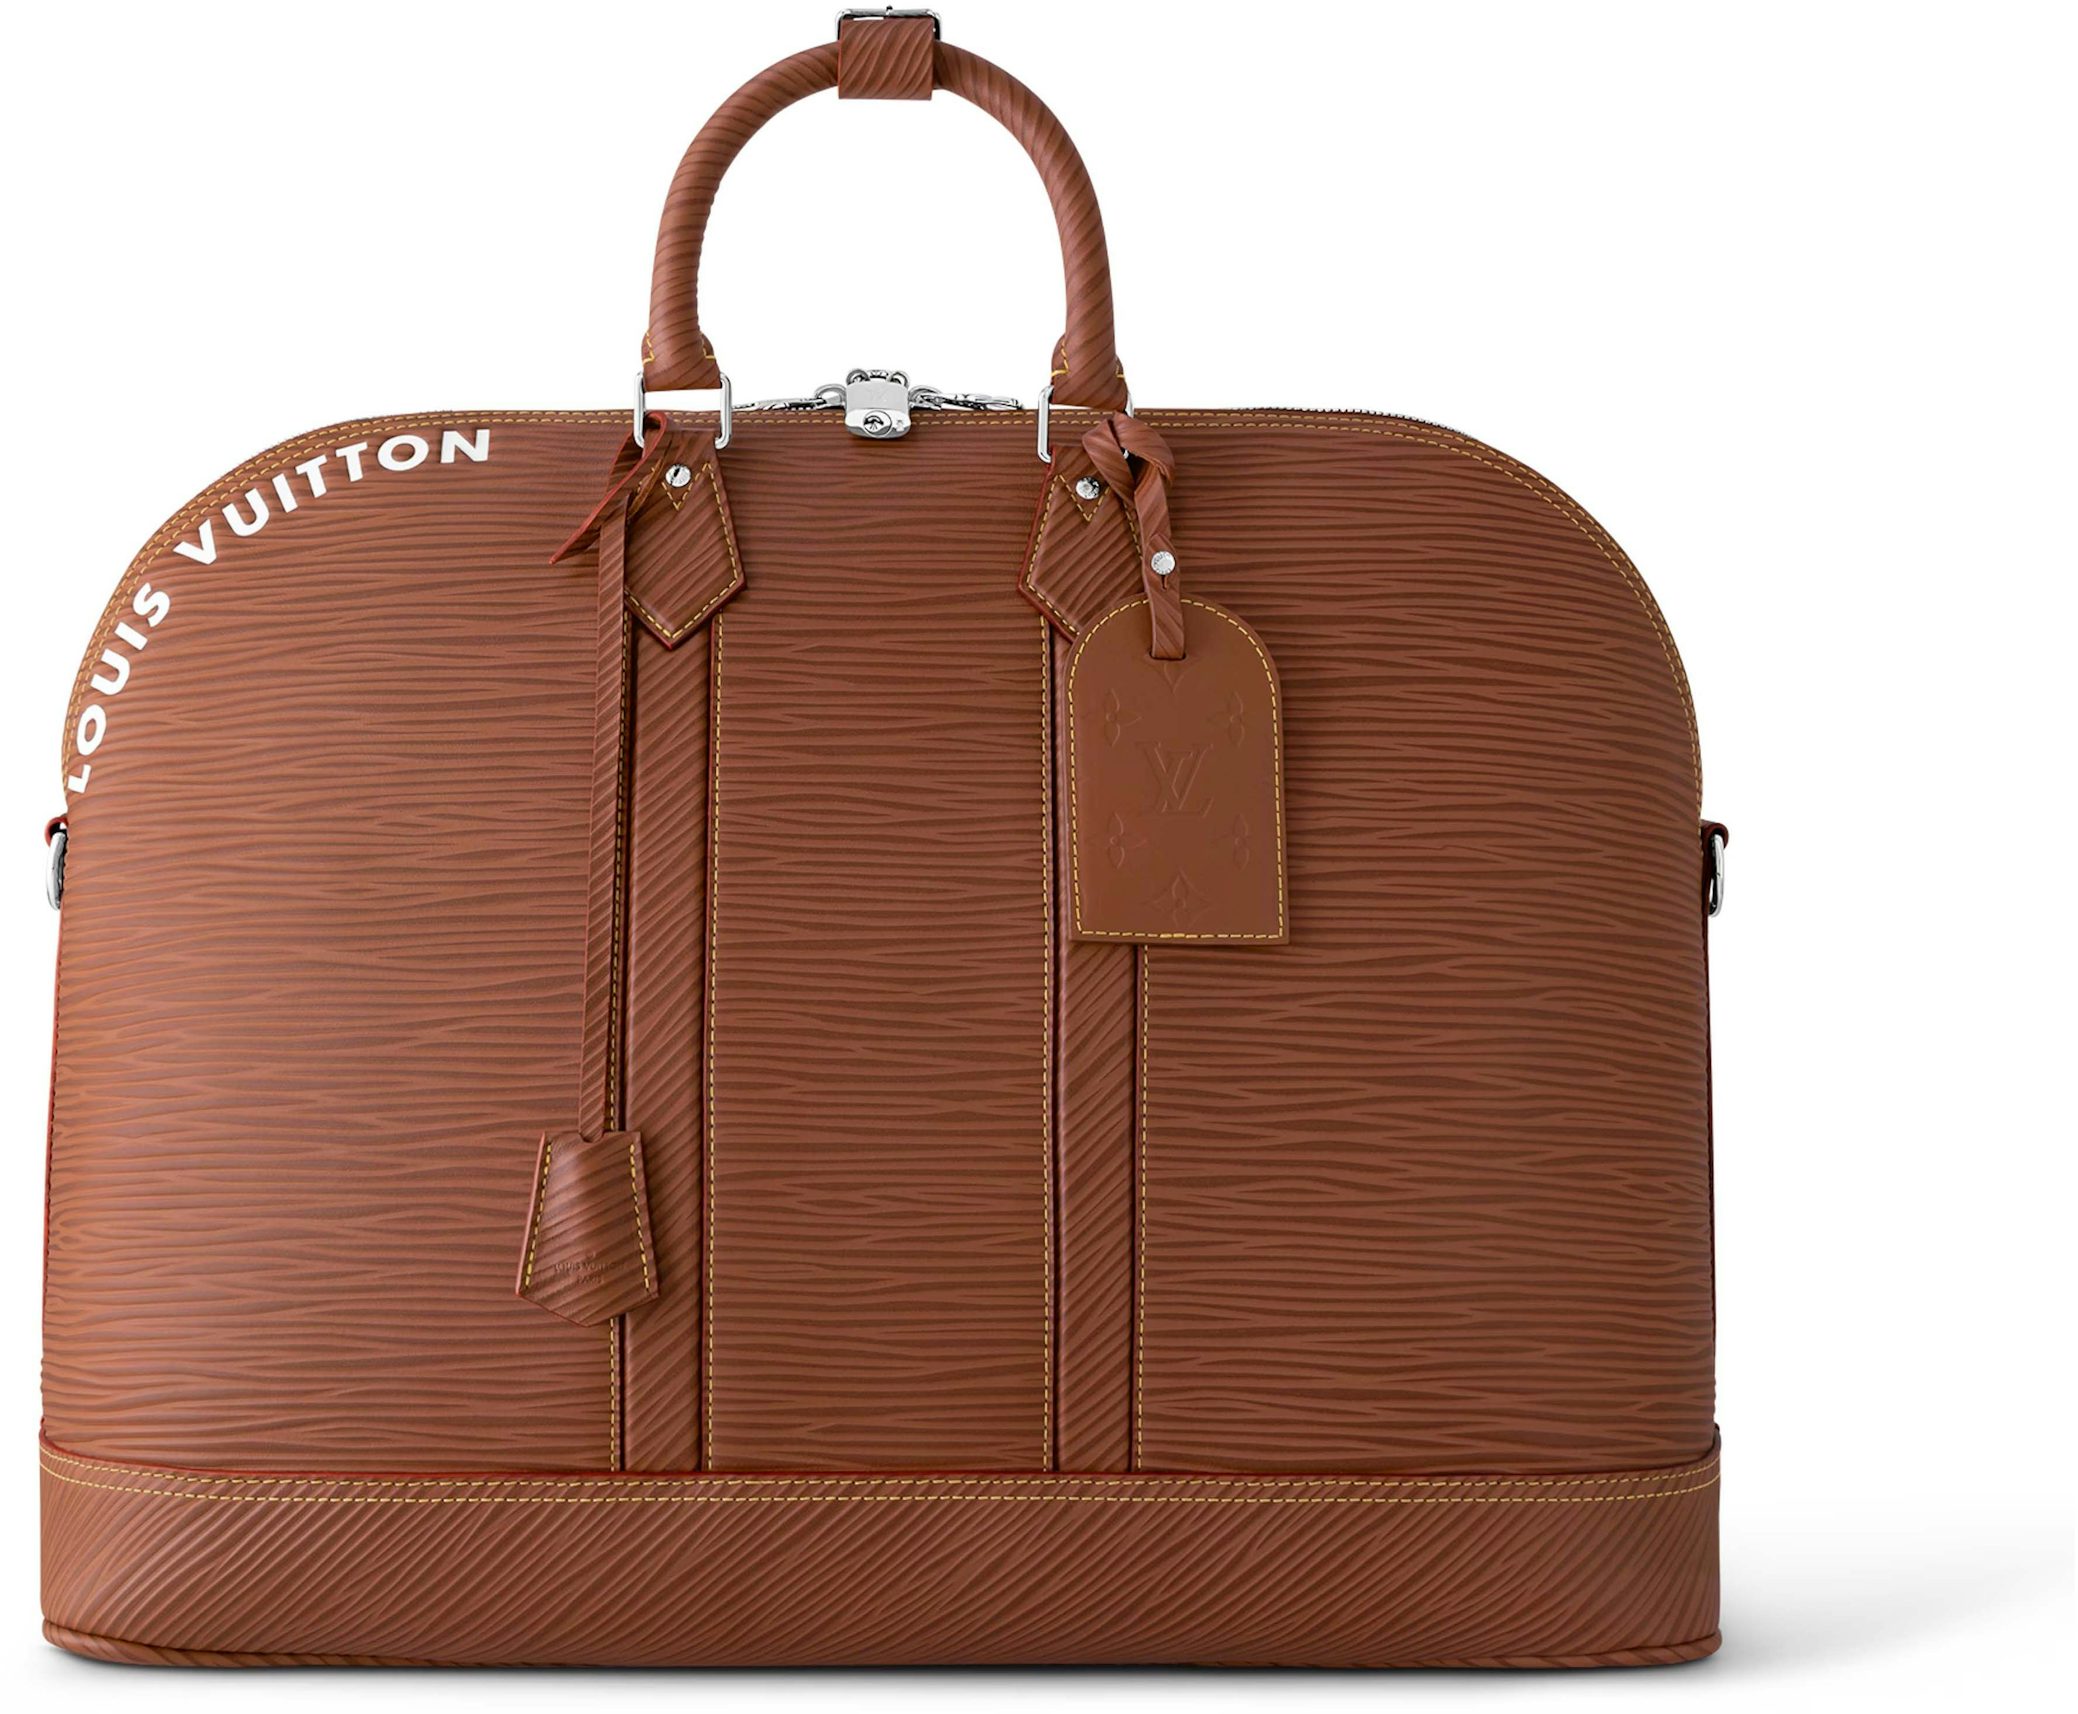 Louis Vuitton 200ml Travel Case Brown Monogram